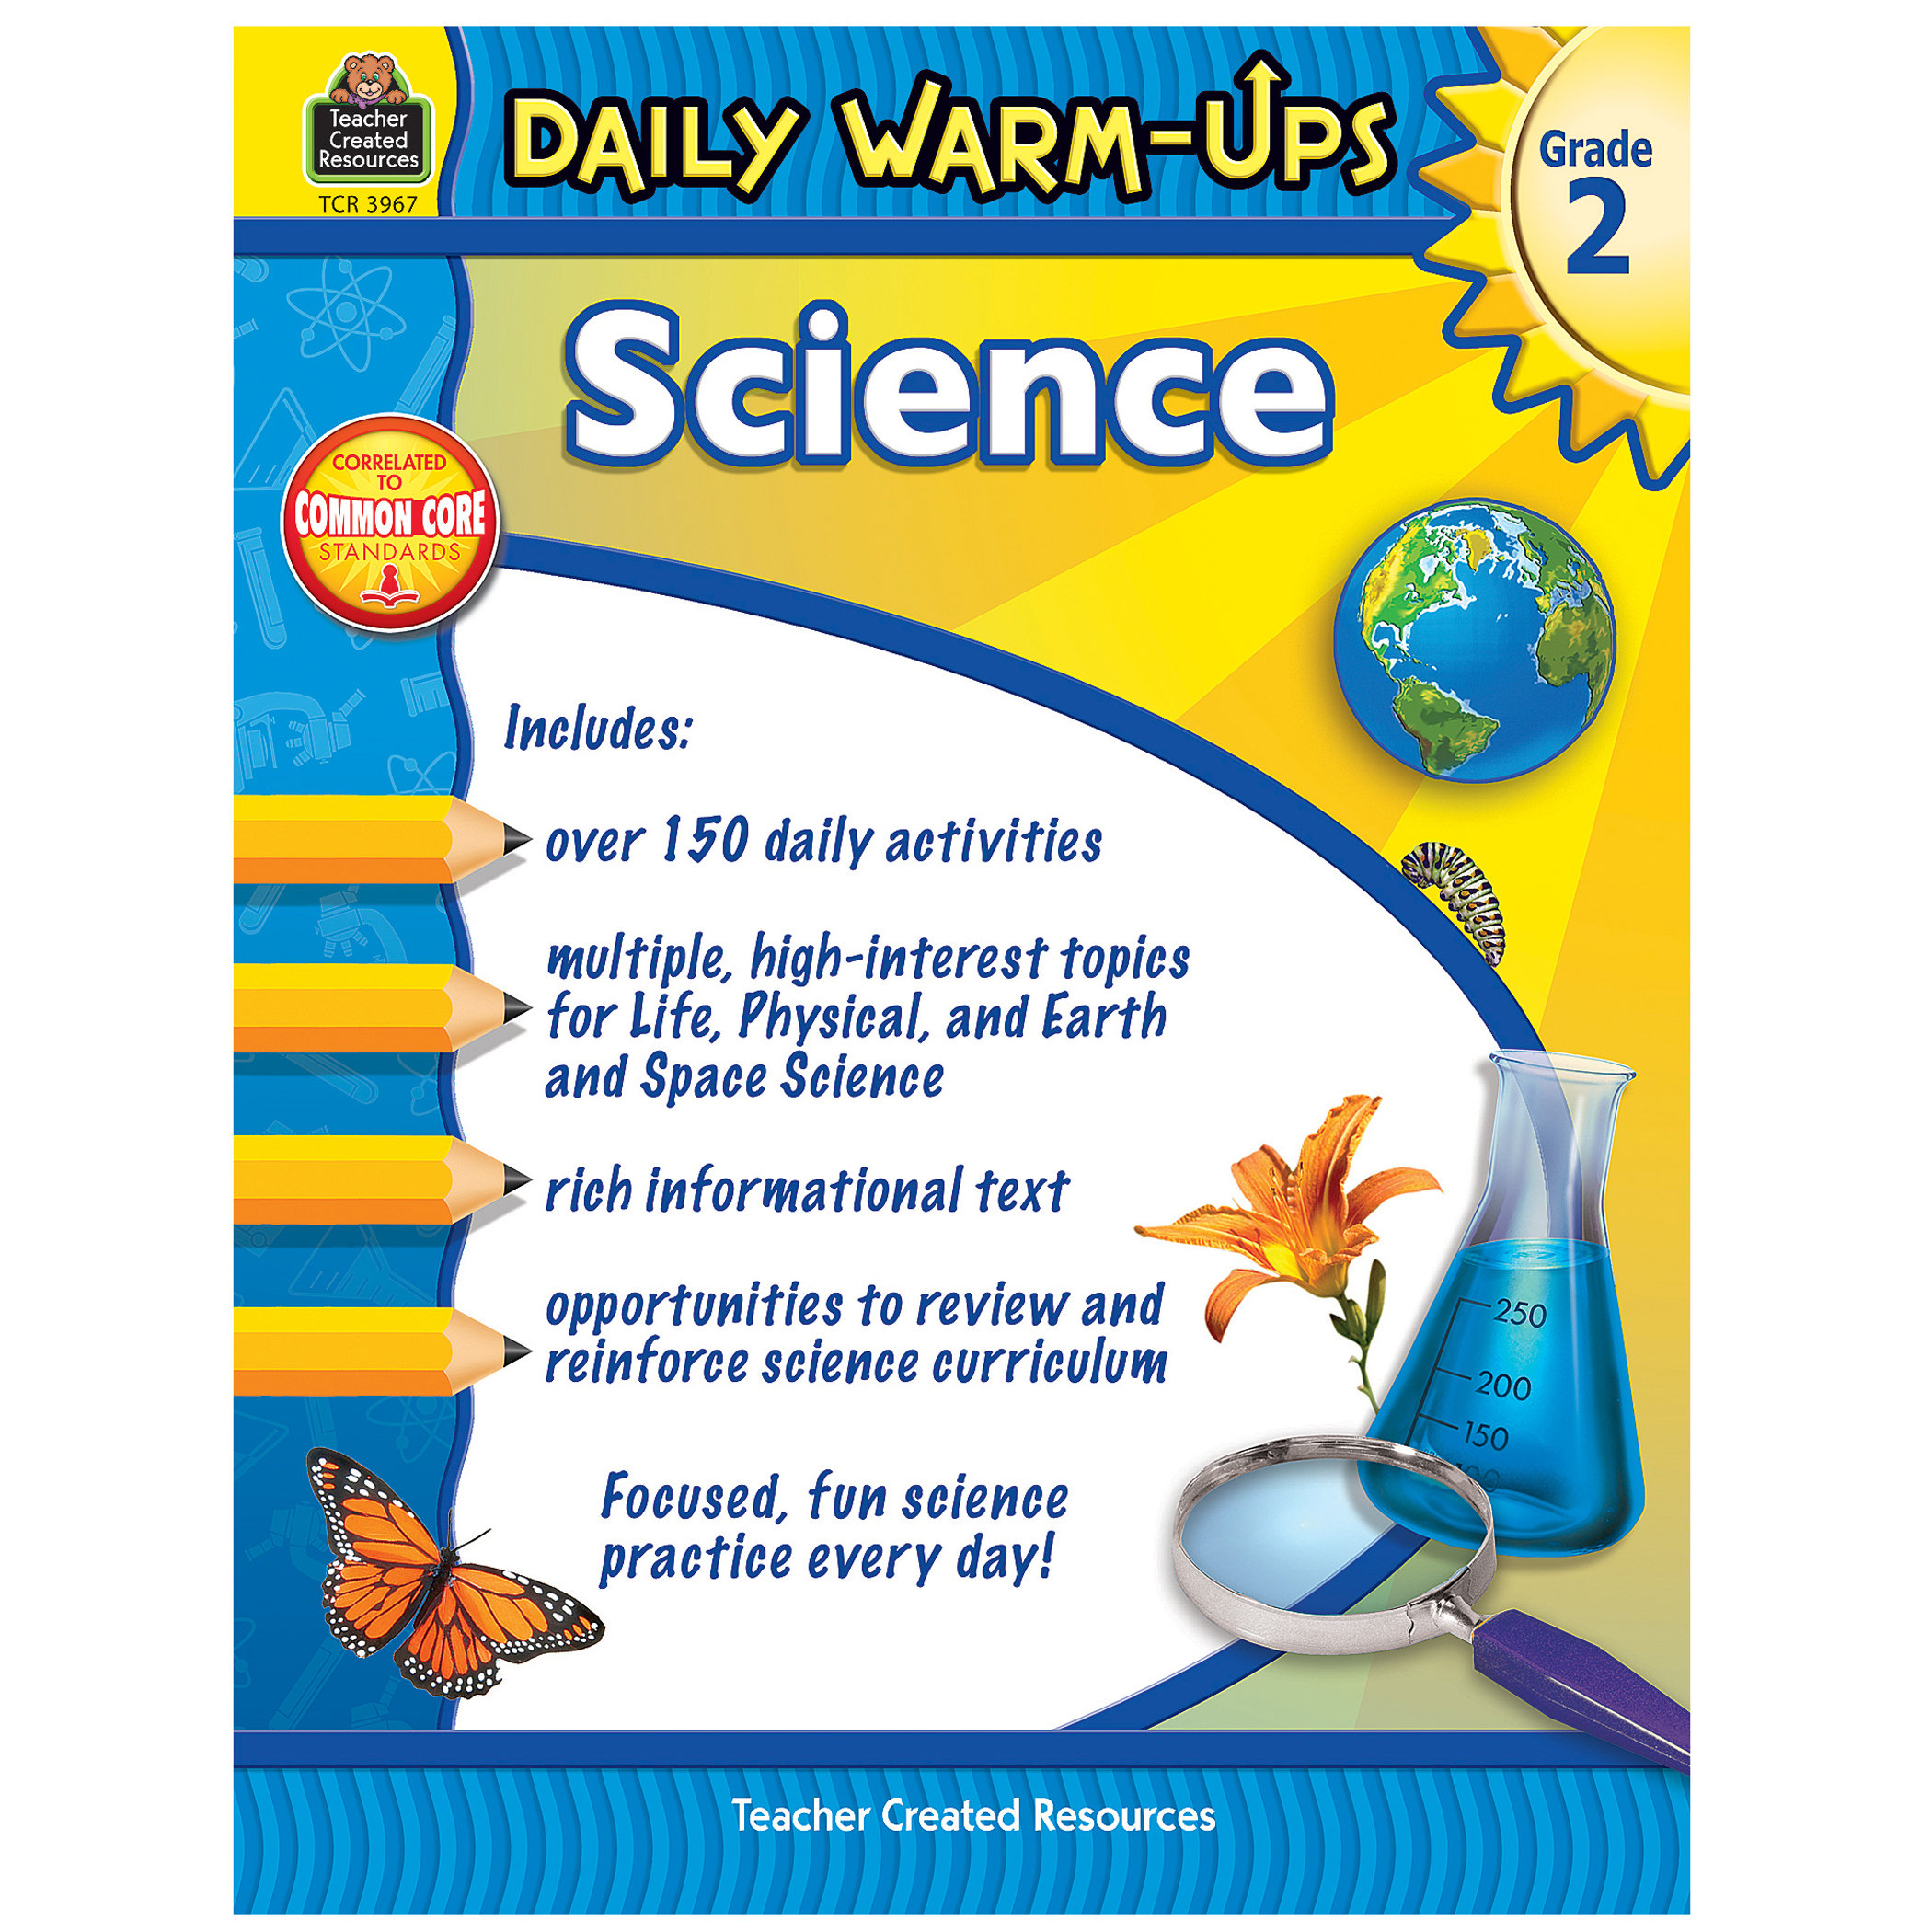 Resources　Created　Warm-Ups　Book　Science　Wayfair　Teacher　Daily